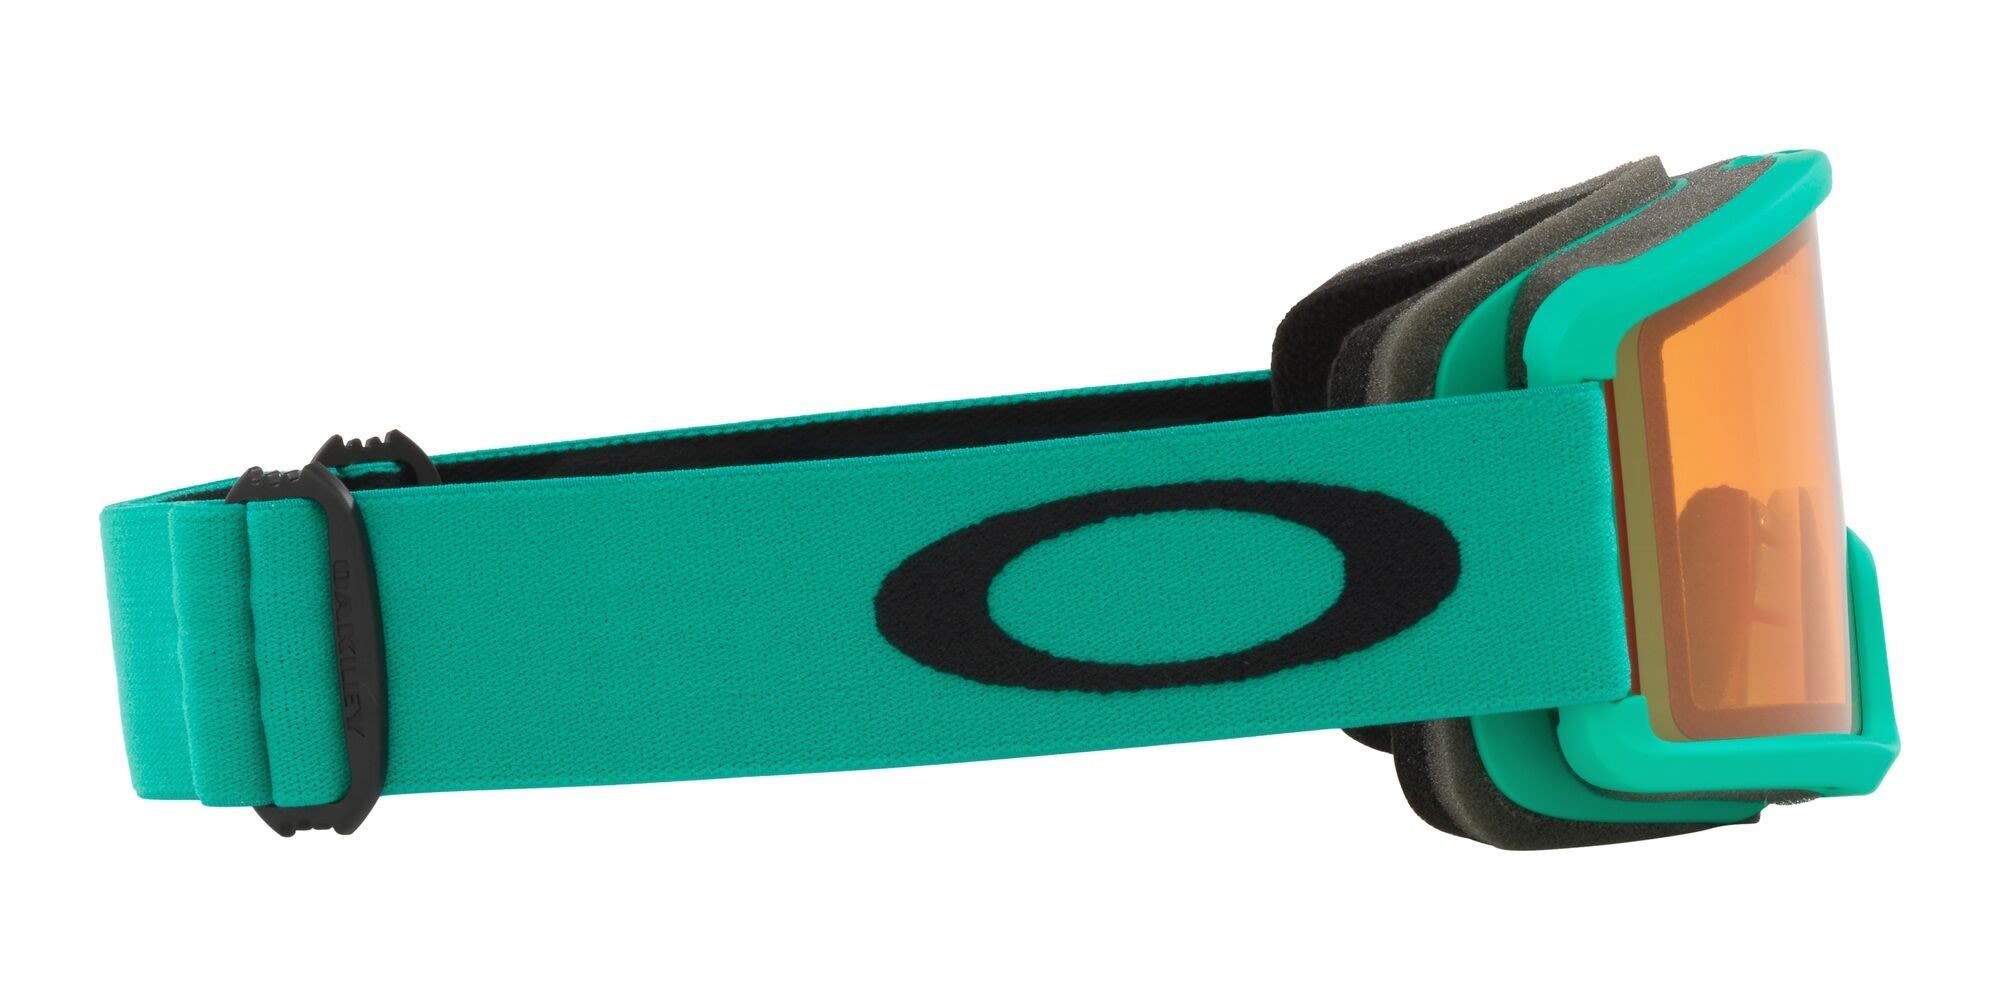 Celeste Oakley Oakley Line Accessoires Skibrille - Target Persimmon S